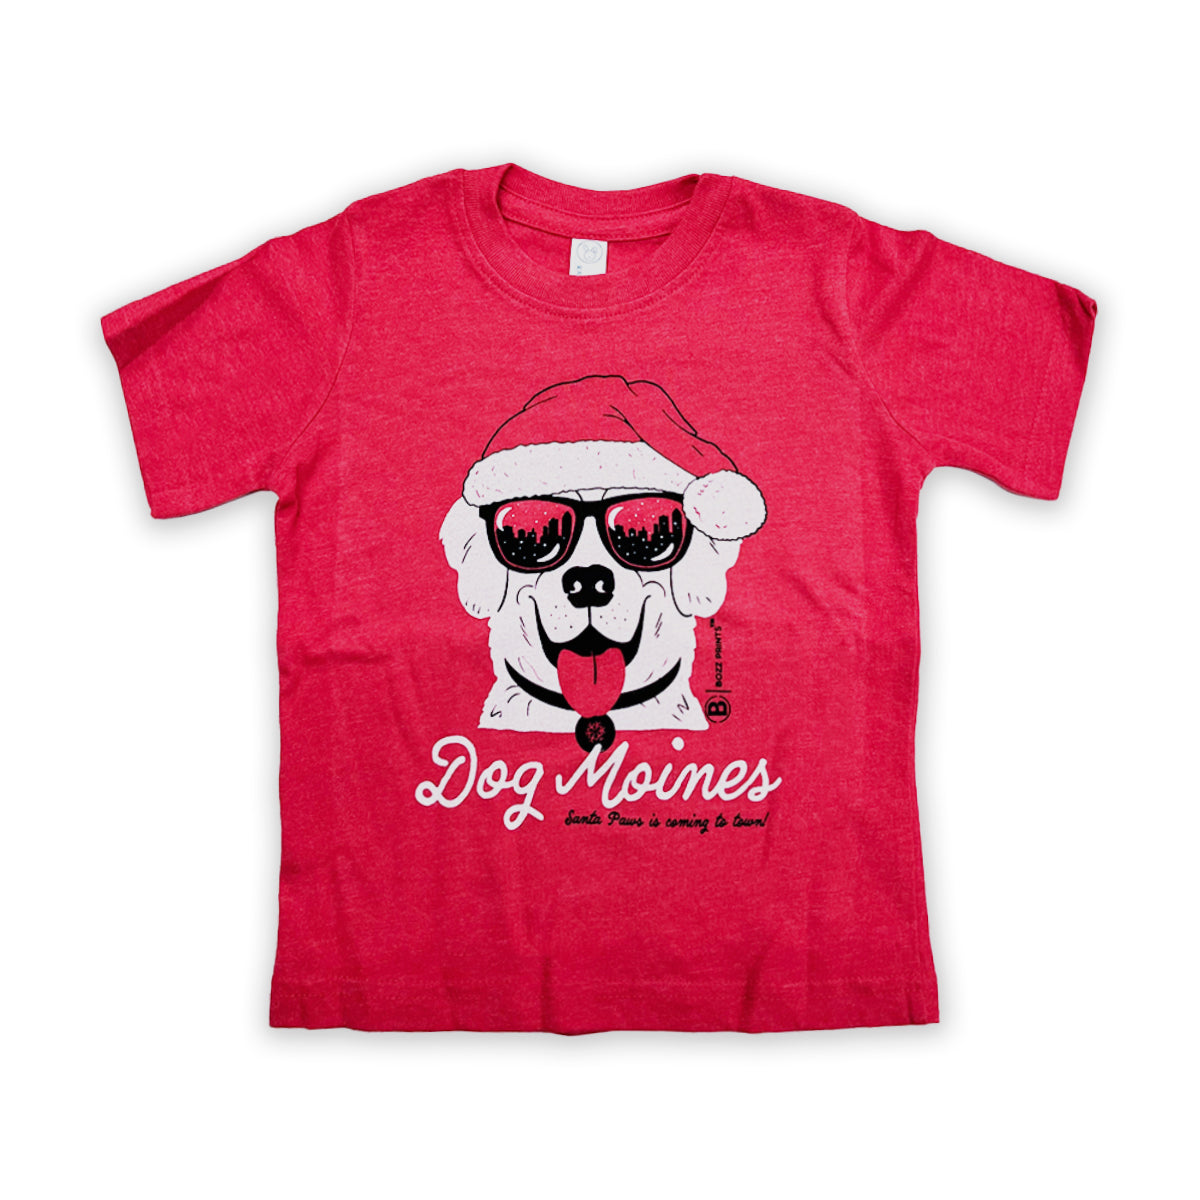 Dog Moines Santa Paws Kids T-Shirt